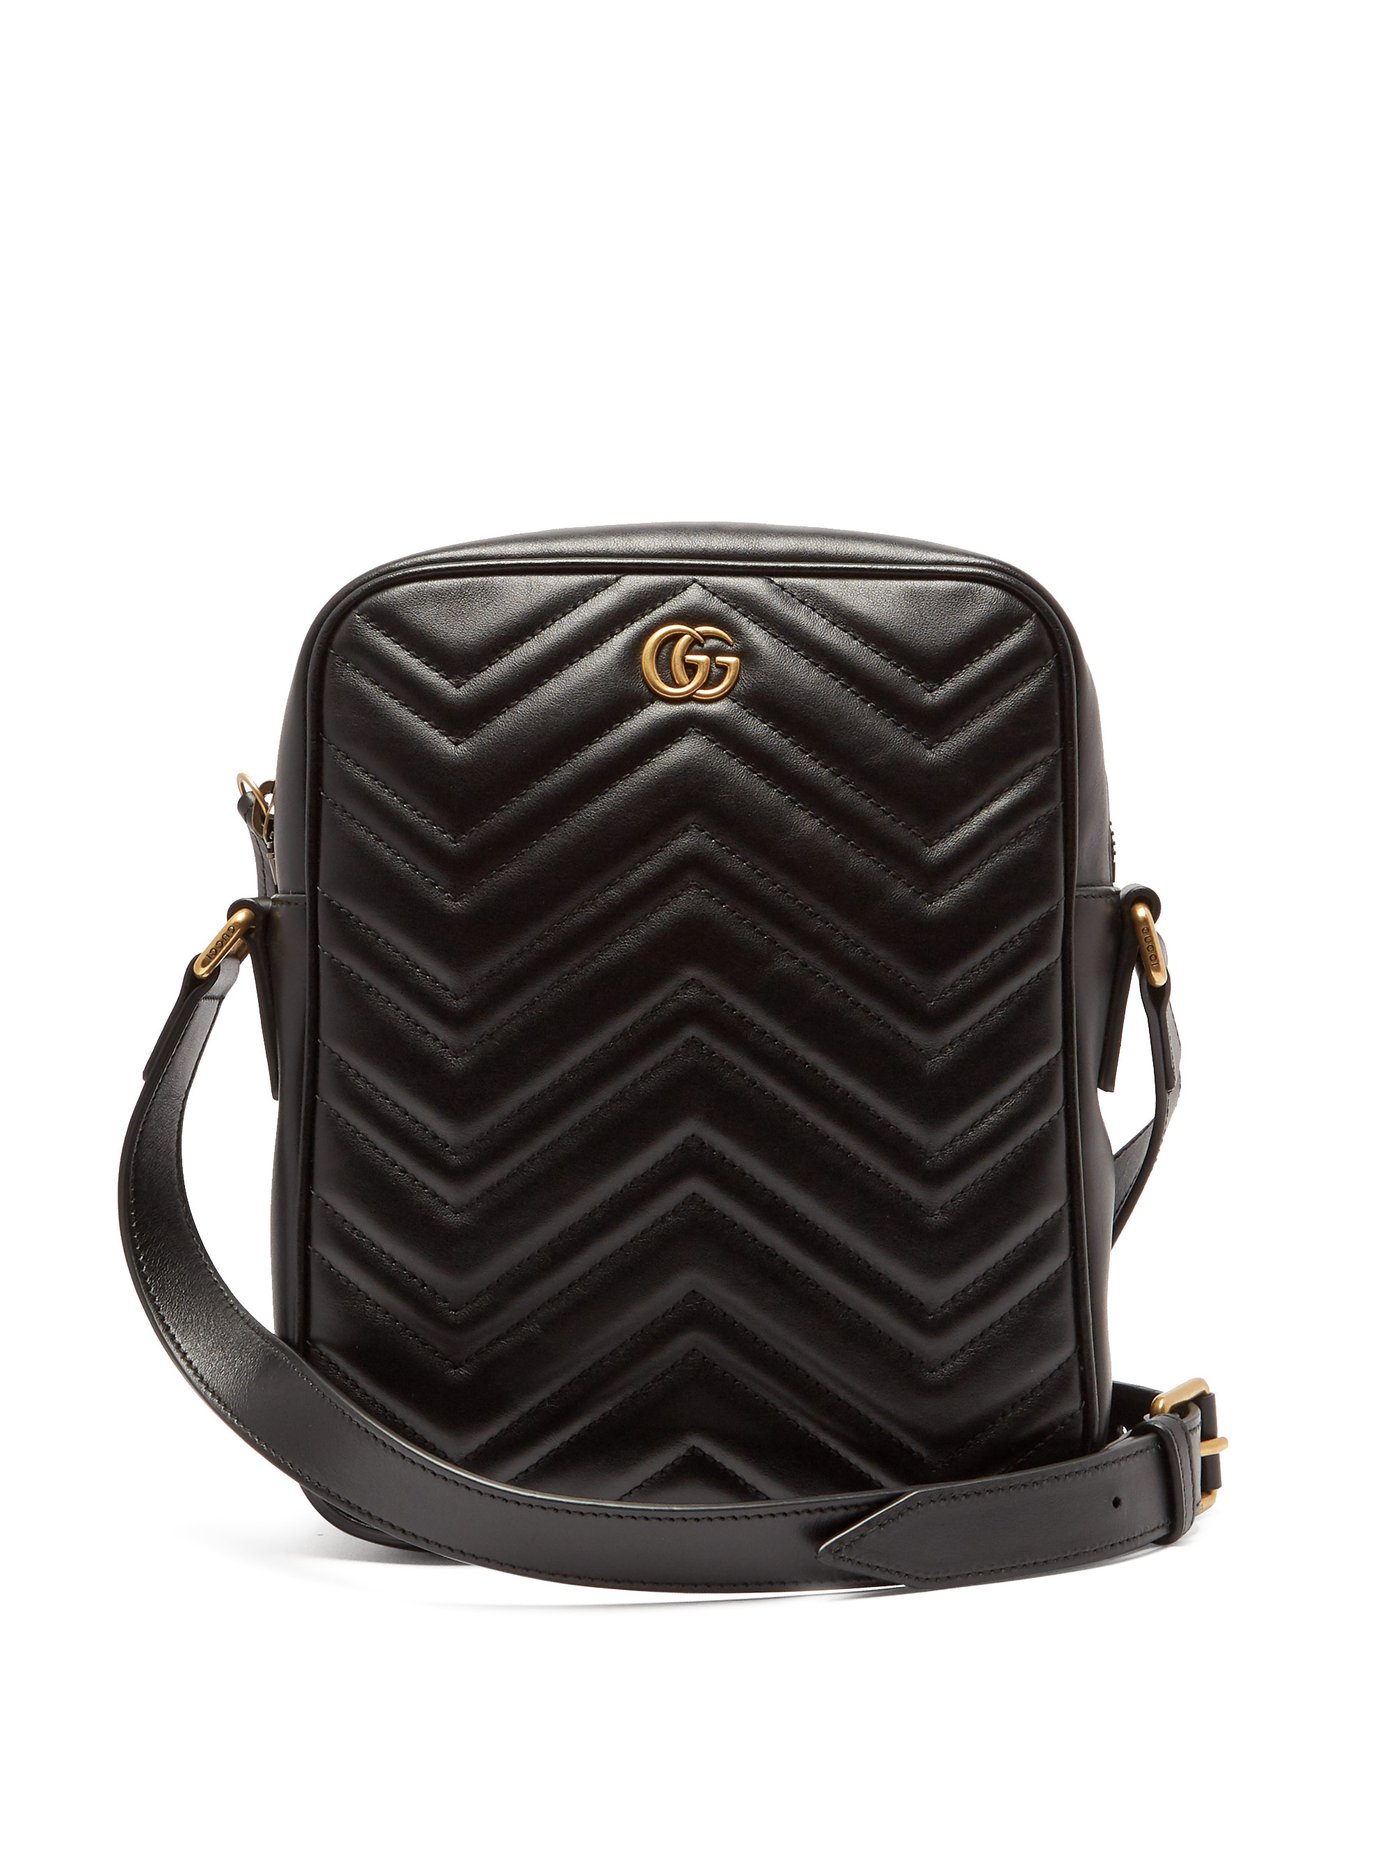 GG Marmont leather messenger bag 